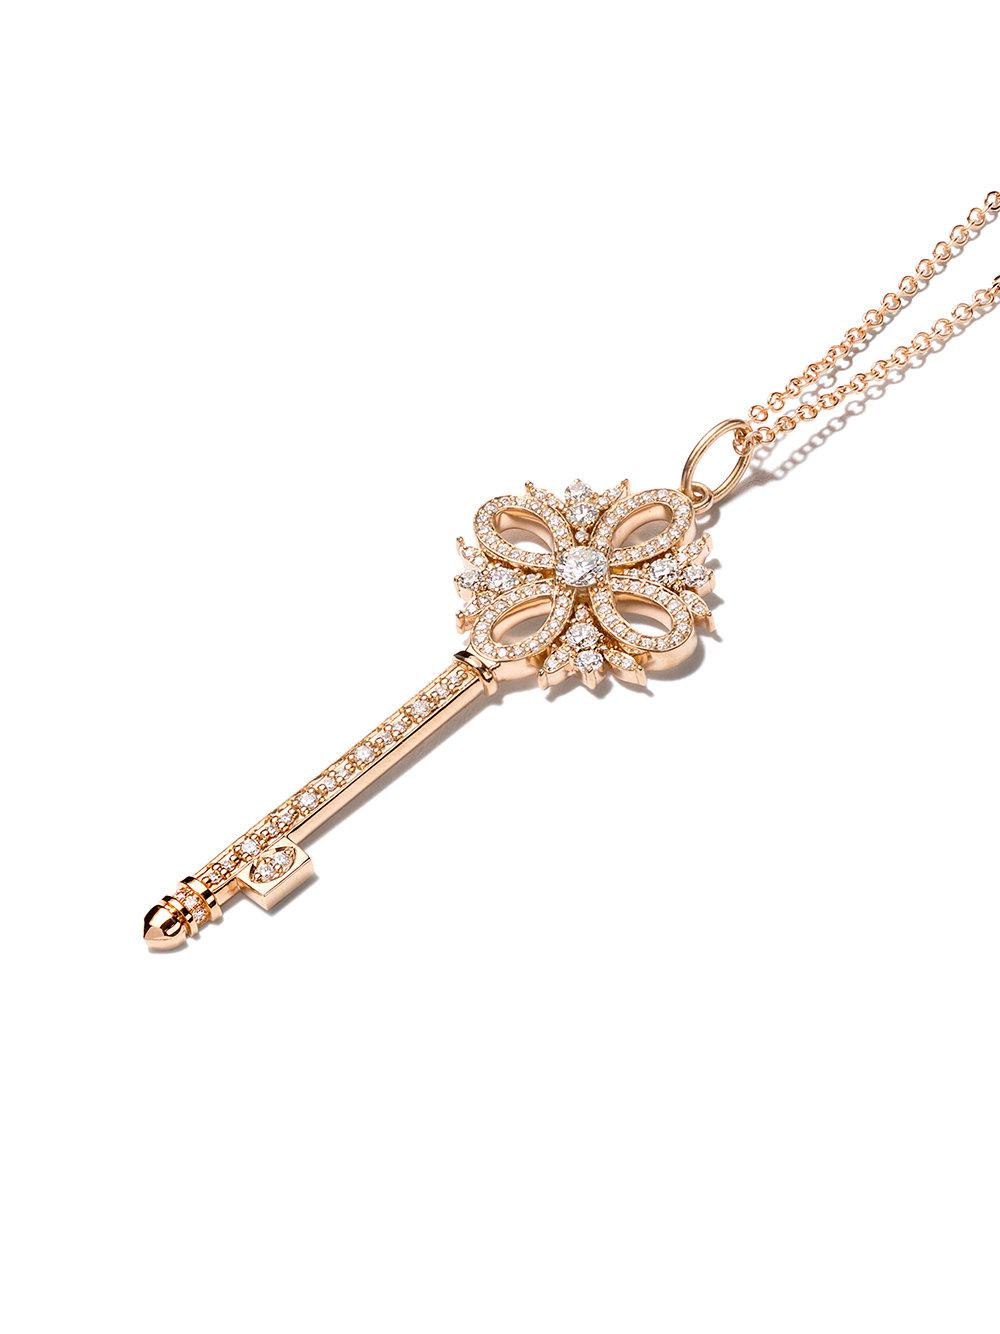 Tiffany Keys Tiffany Victoria® key in 18k gold with diamonds, mini